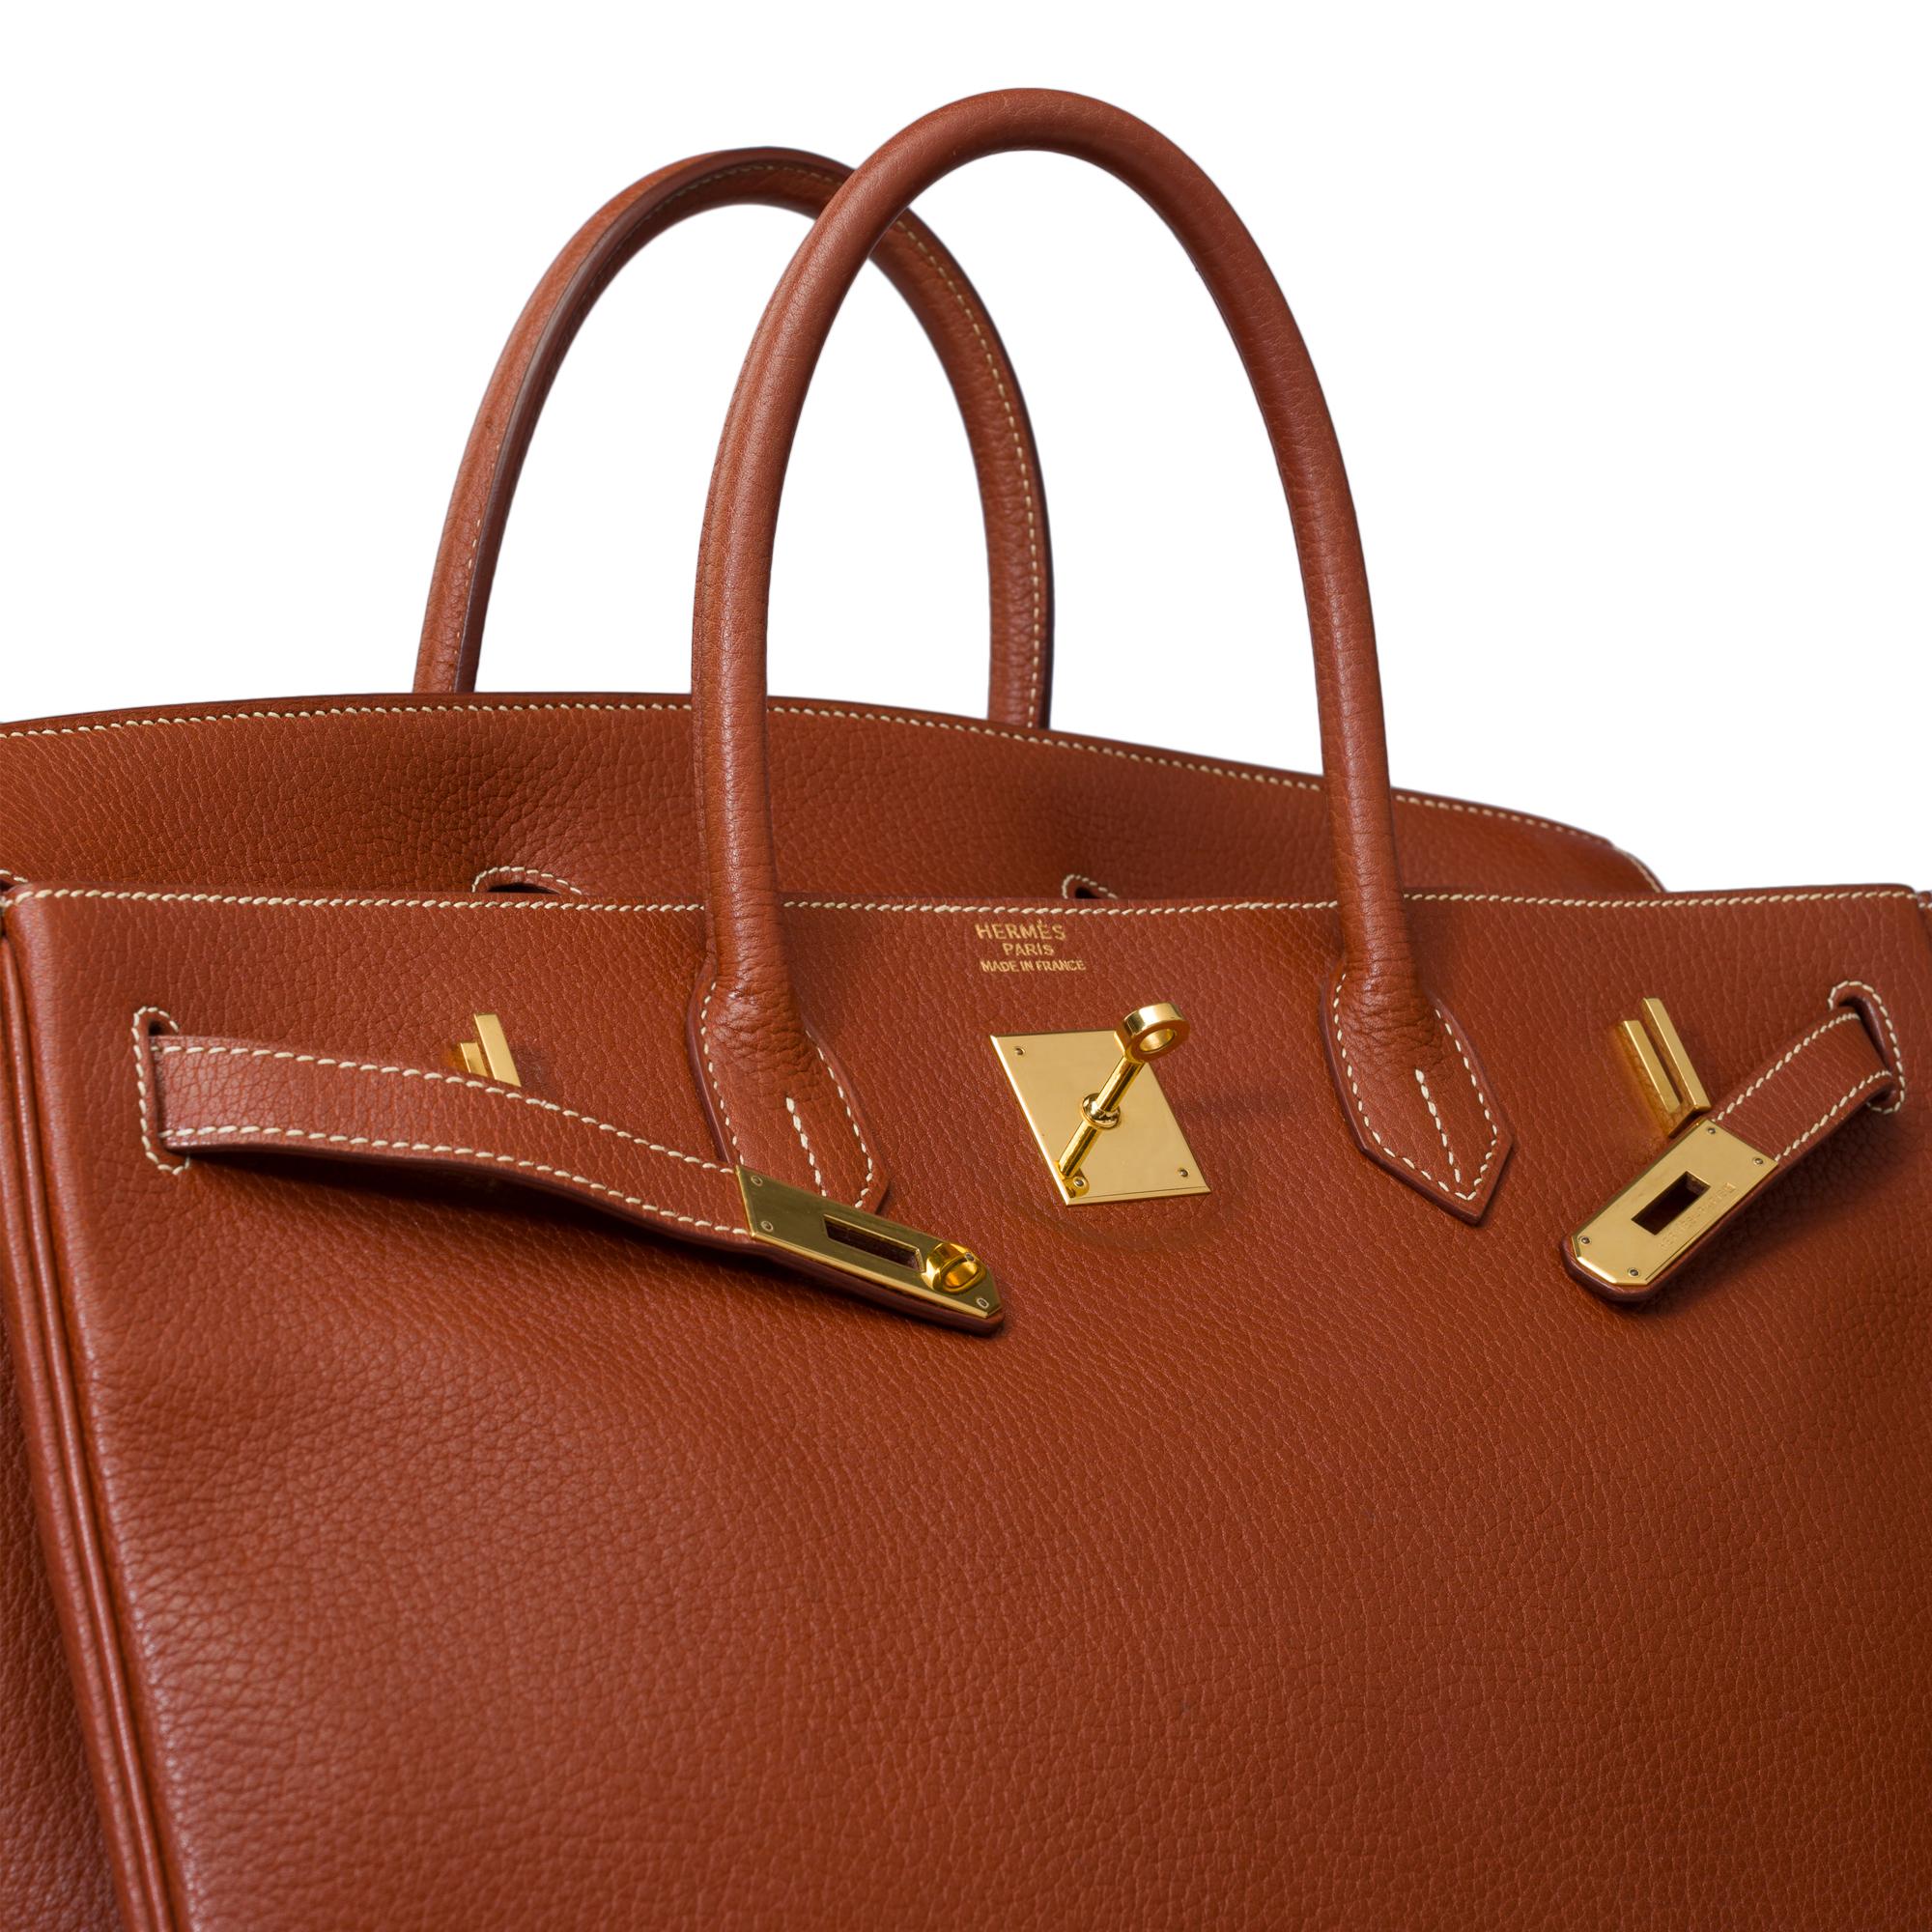 Classy & Rare Hermes Birkin 40 handbag in Brick Fjord leather, GHW 3